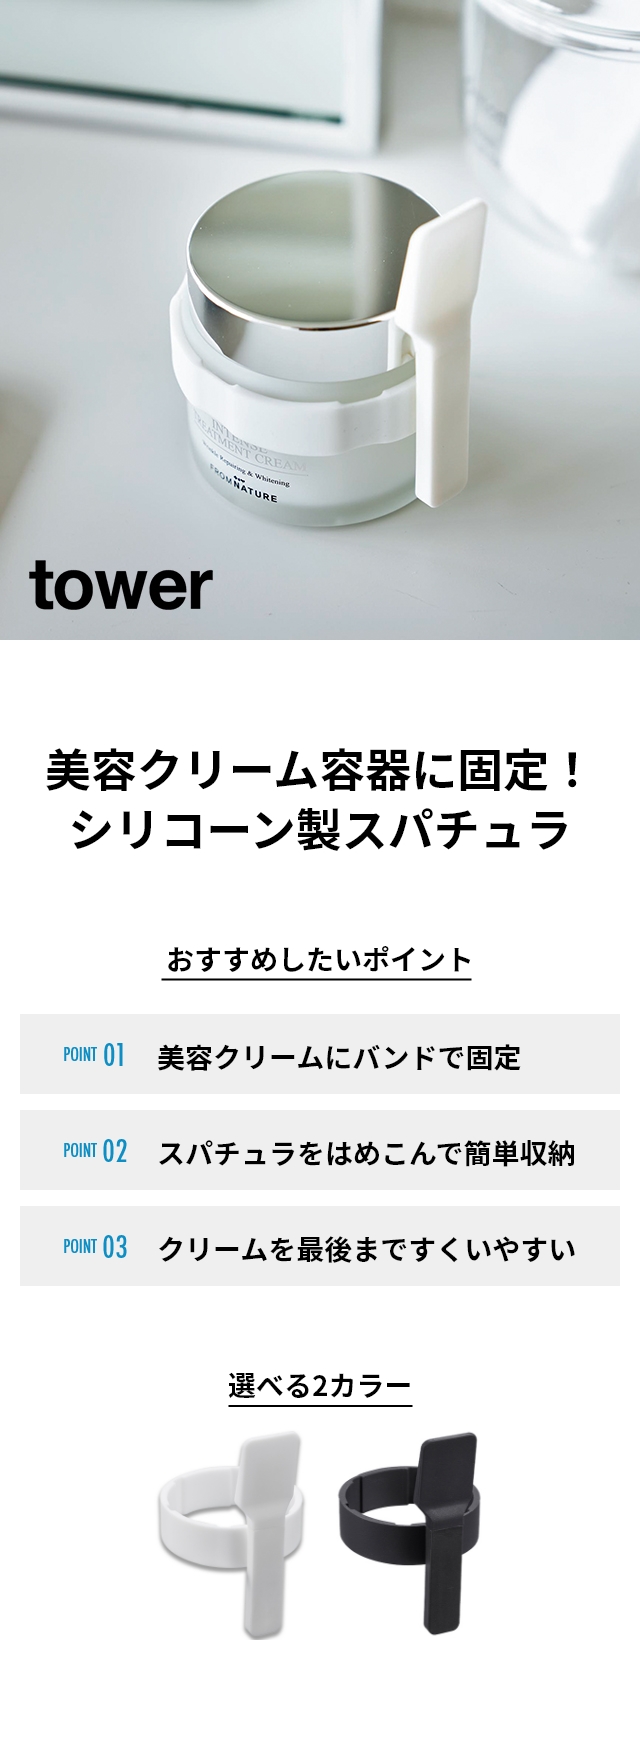 tower(タワー) 収納バンド付き美容クリームスパチュラ